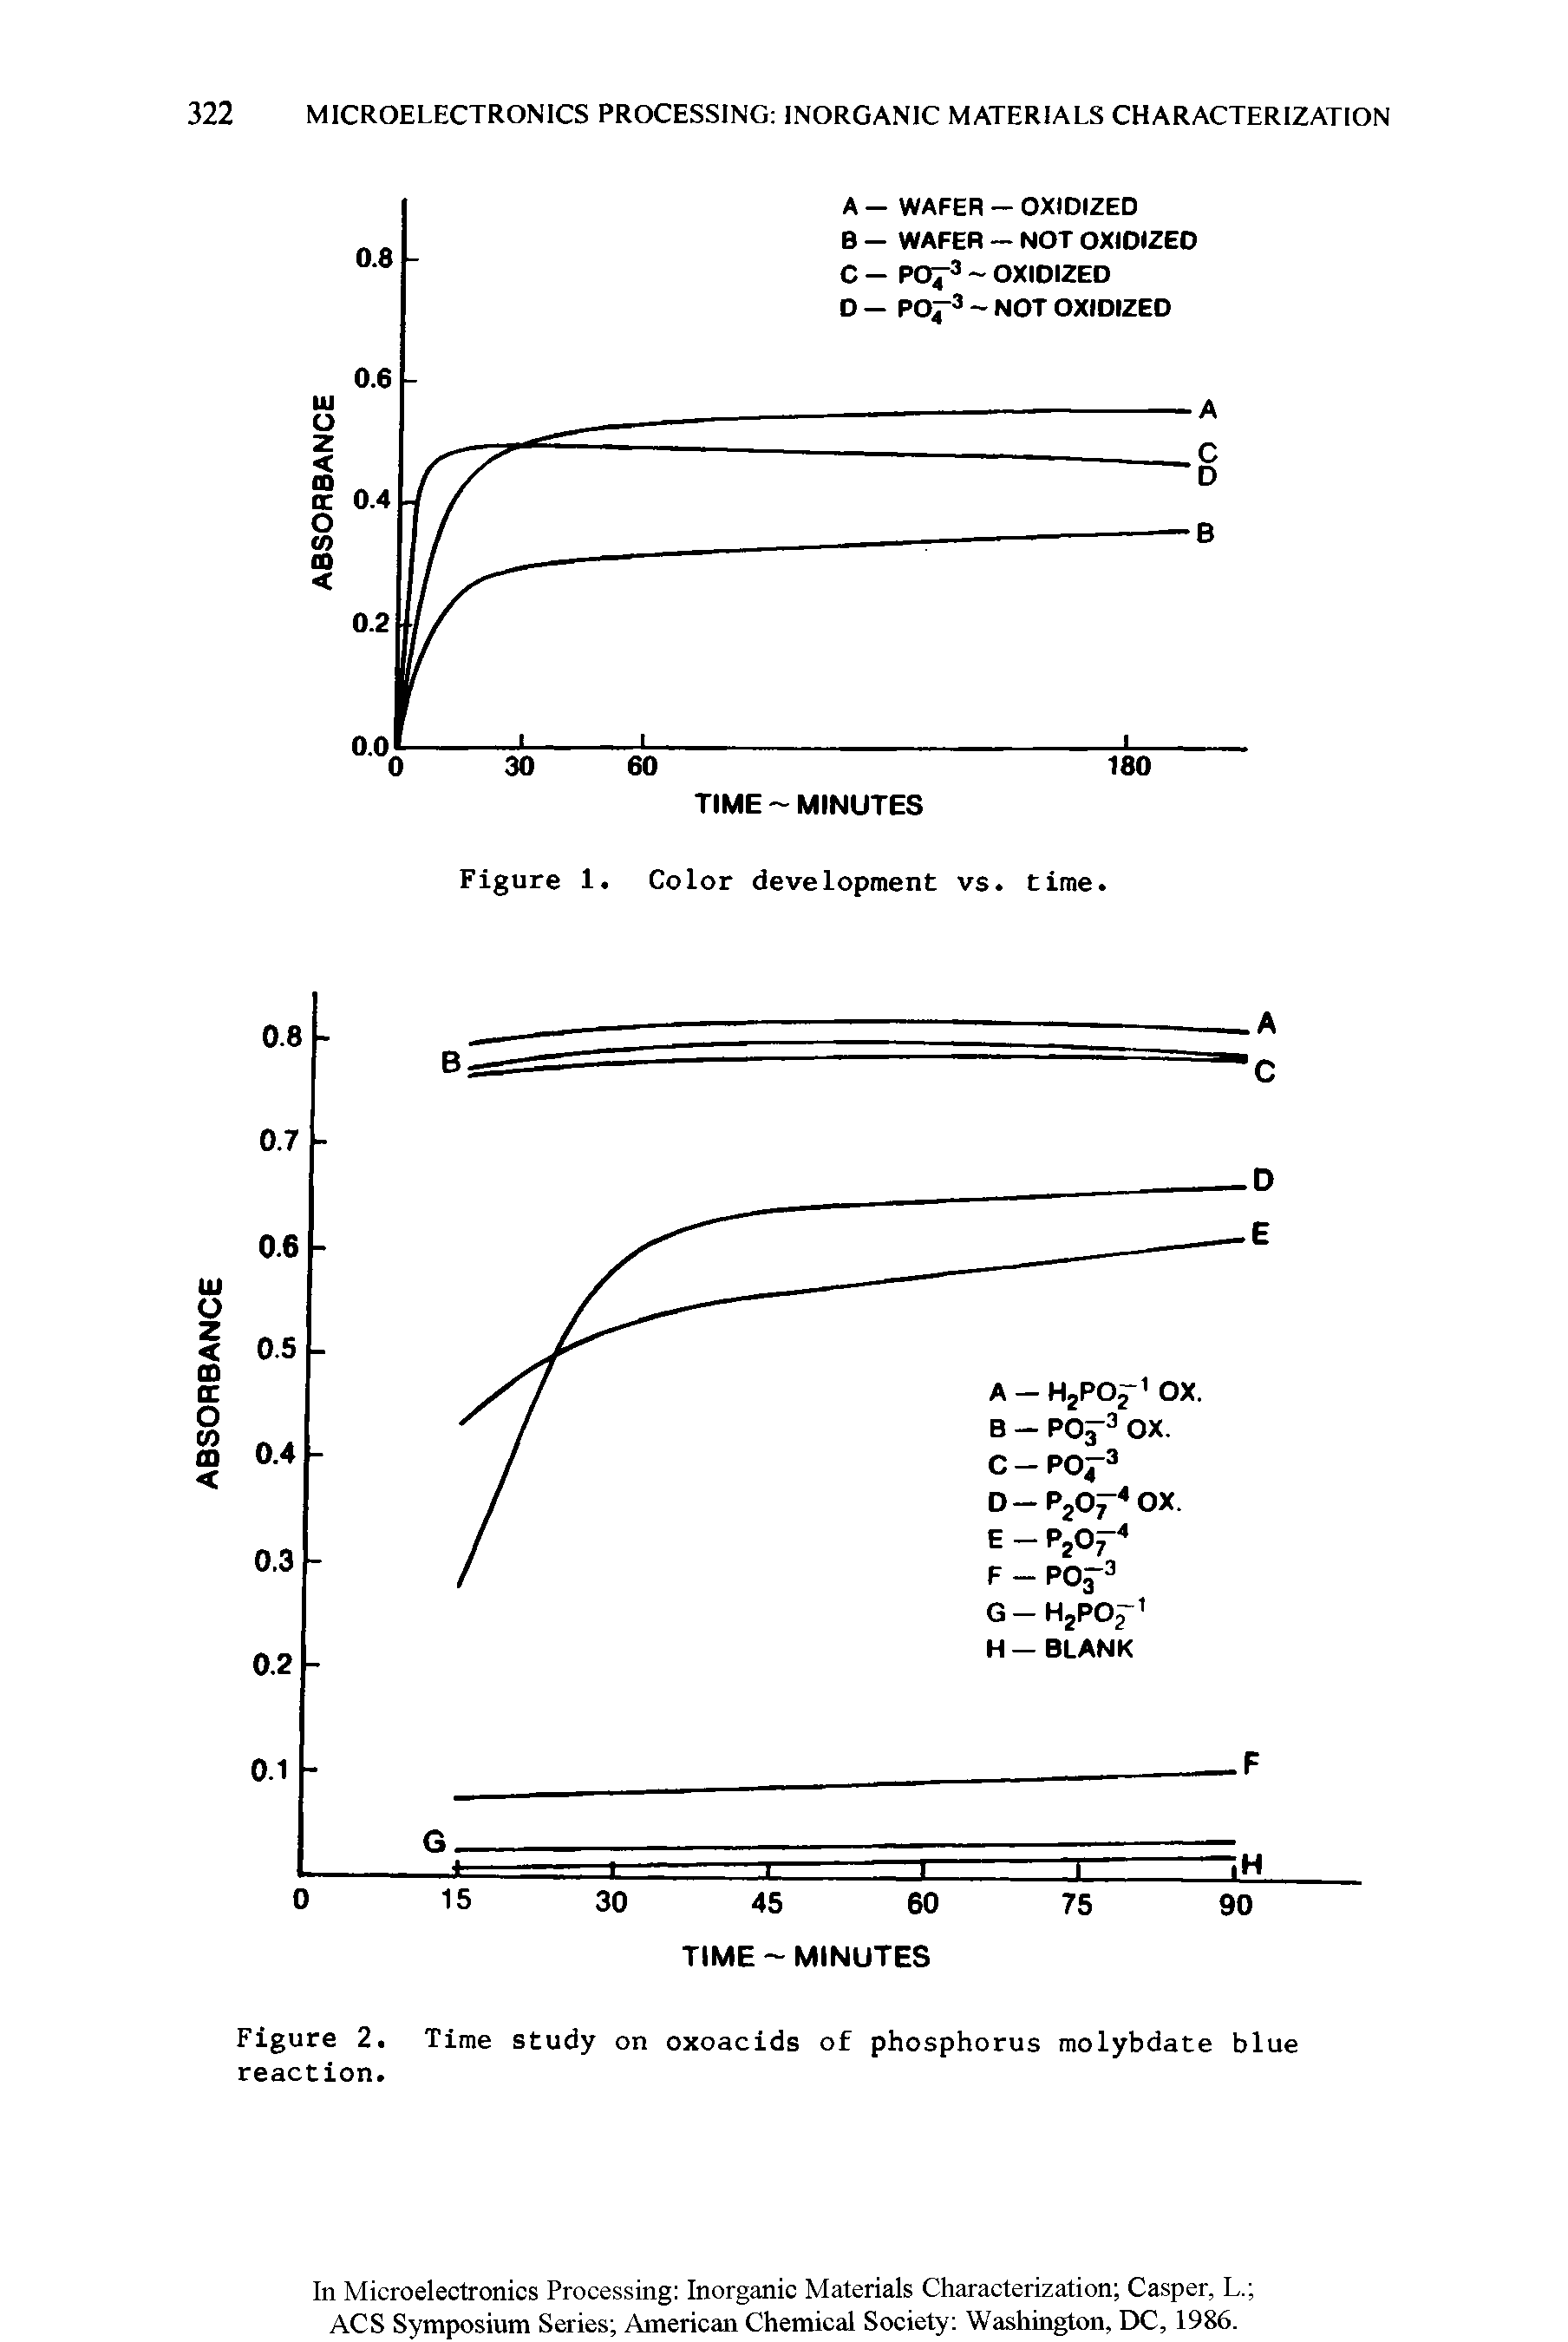 Figure 2. Time study on oxoacids of phosphorus molybdate blue reaction.